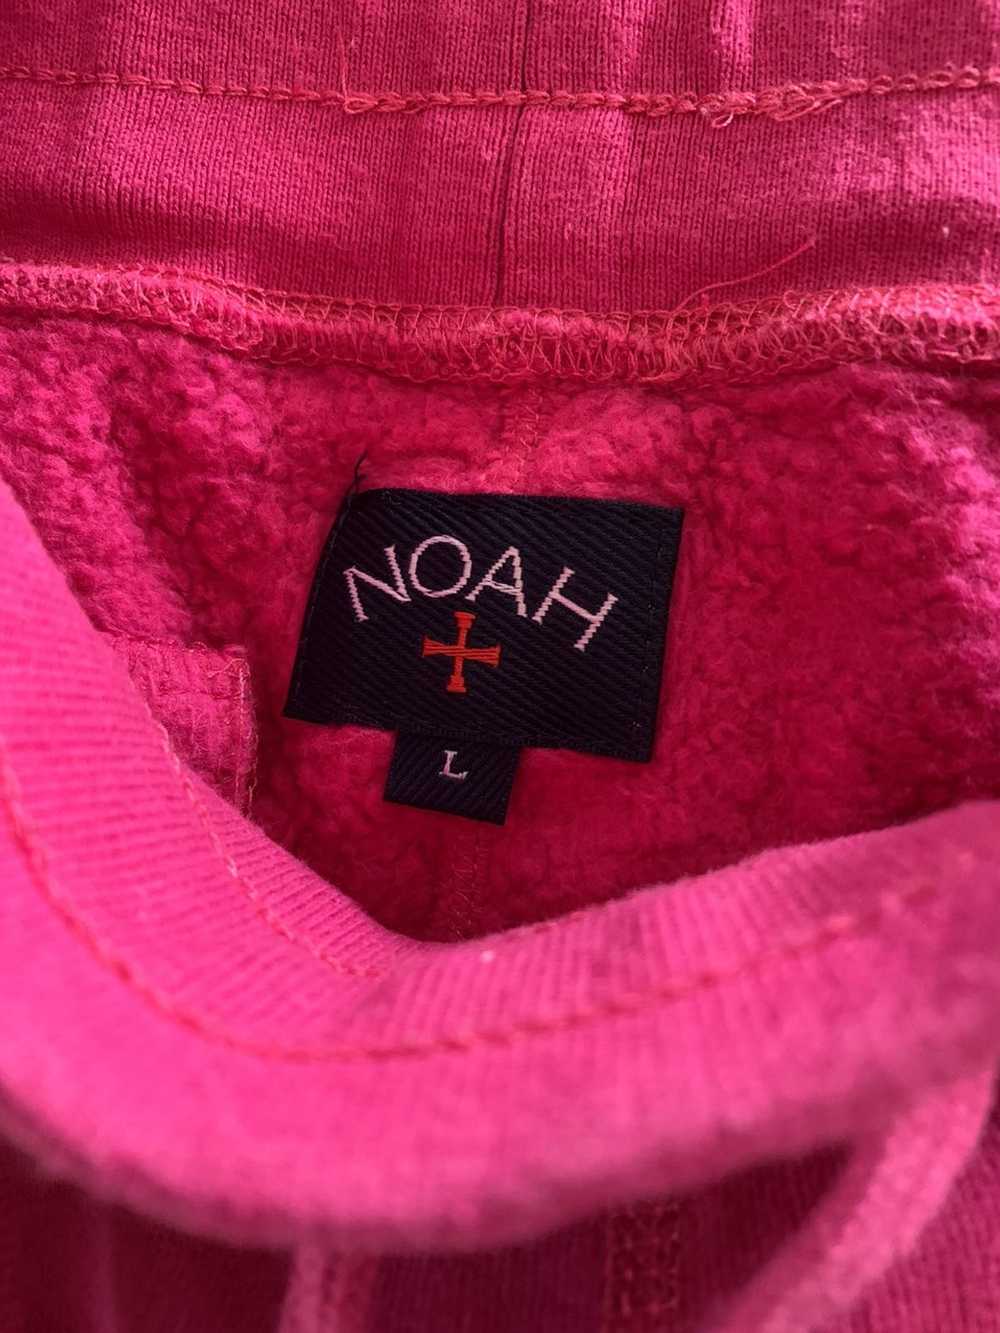 Noah Noah Pink Sweatpants - image 5